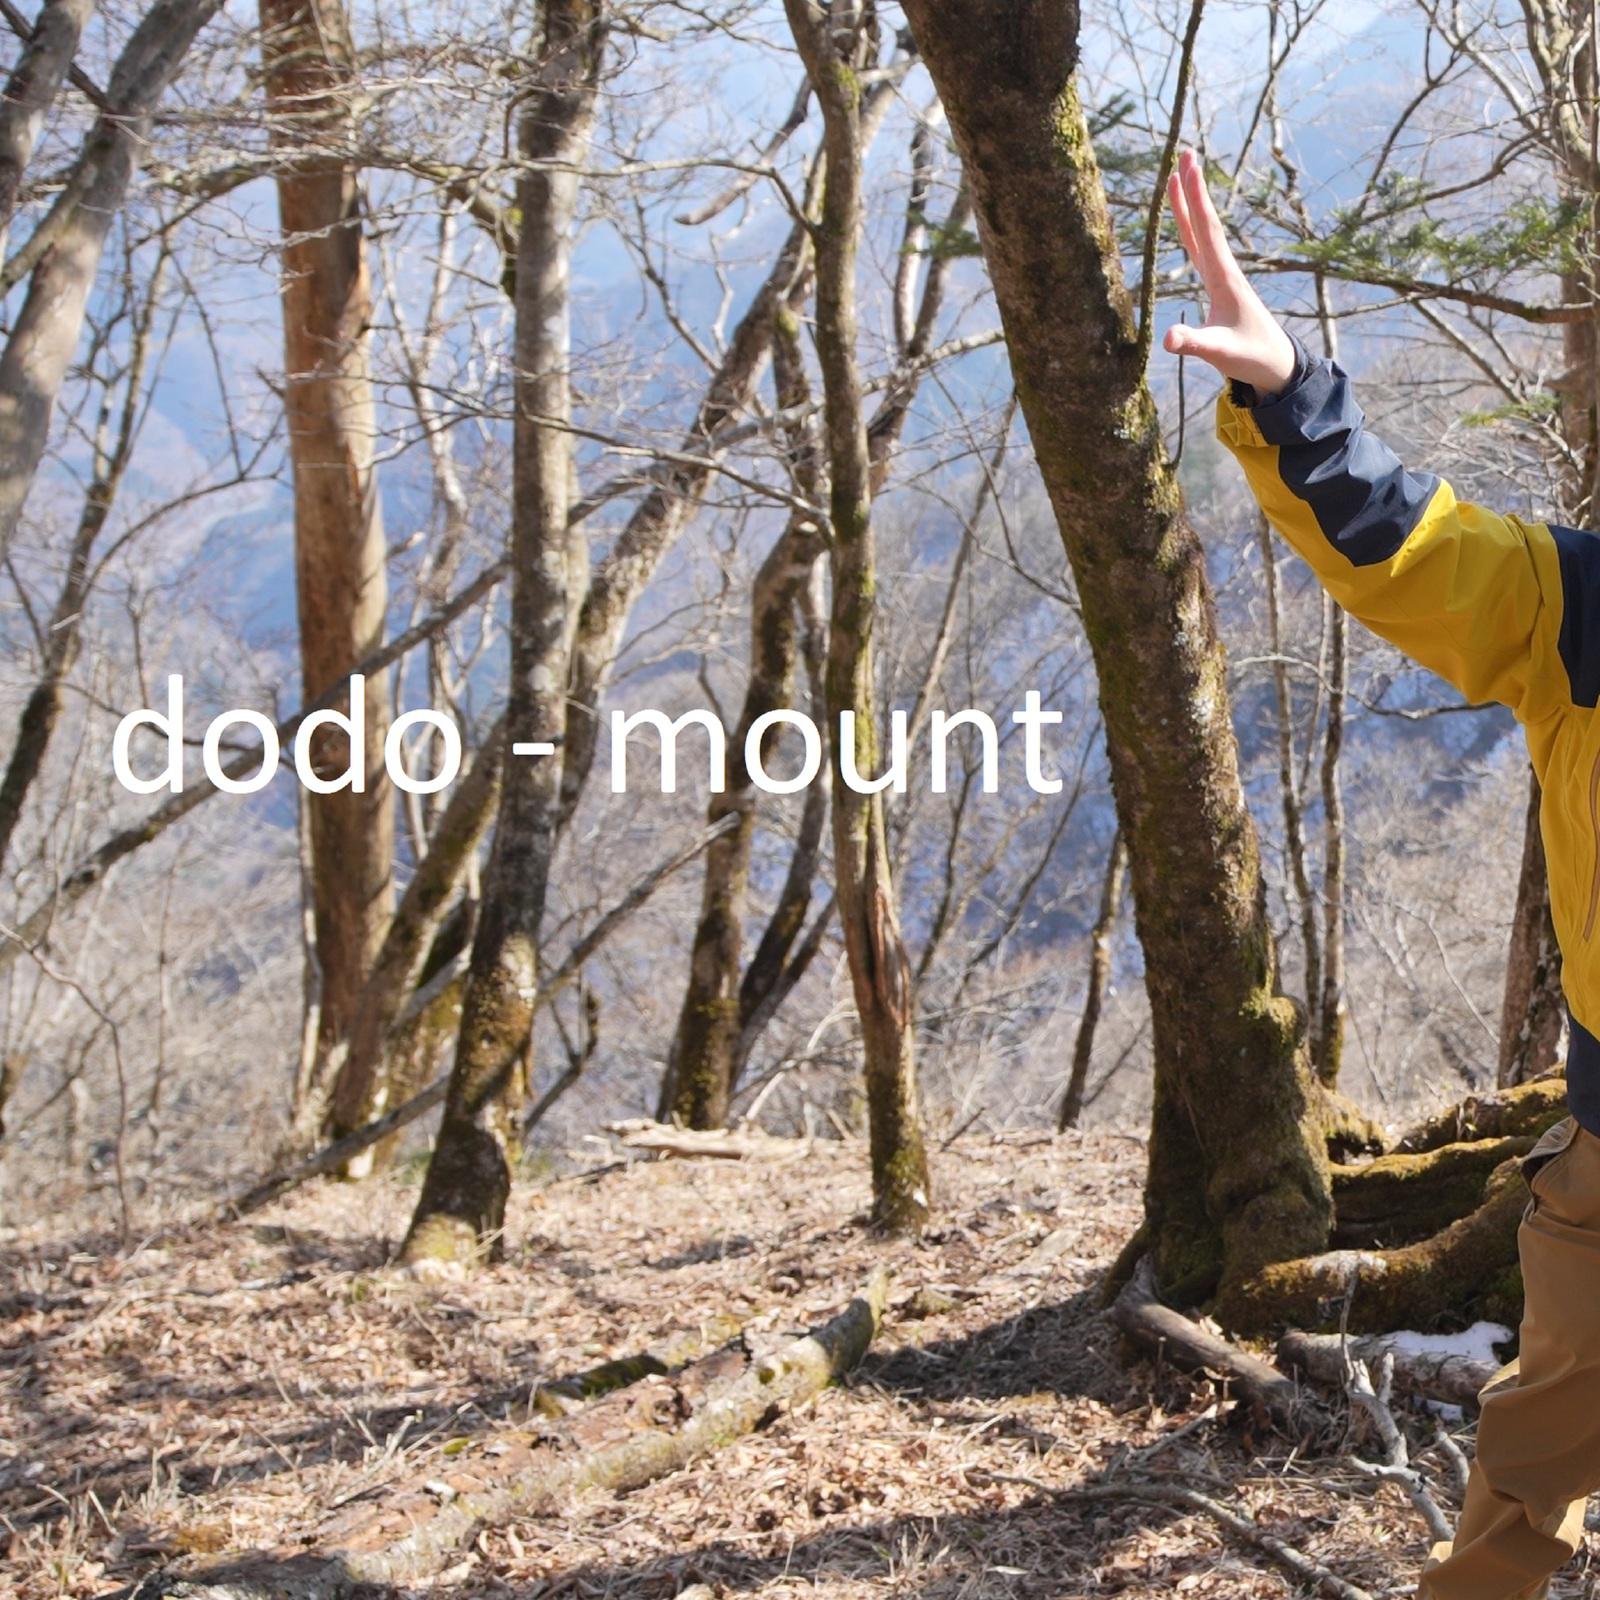 dodo - mount